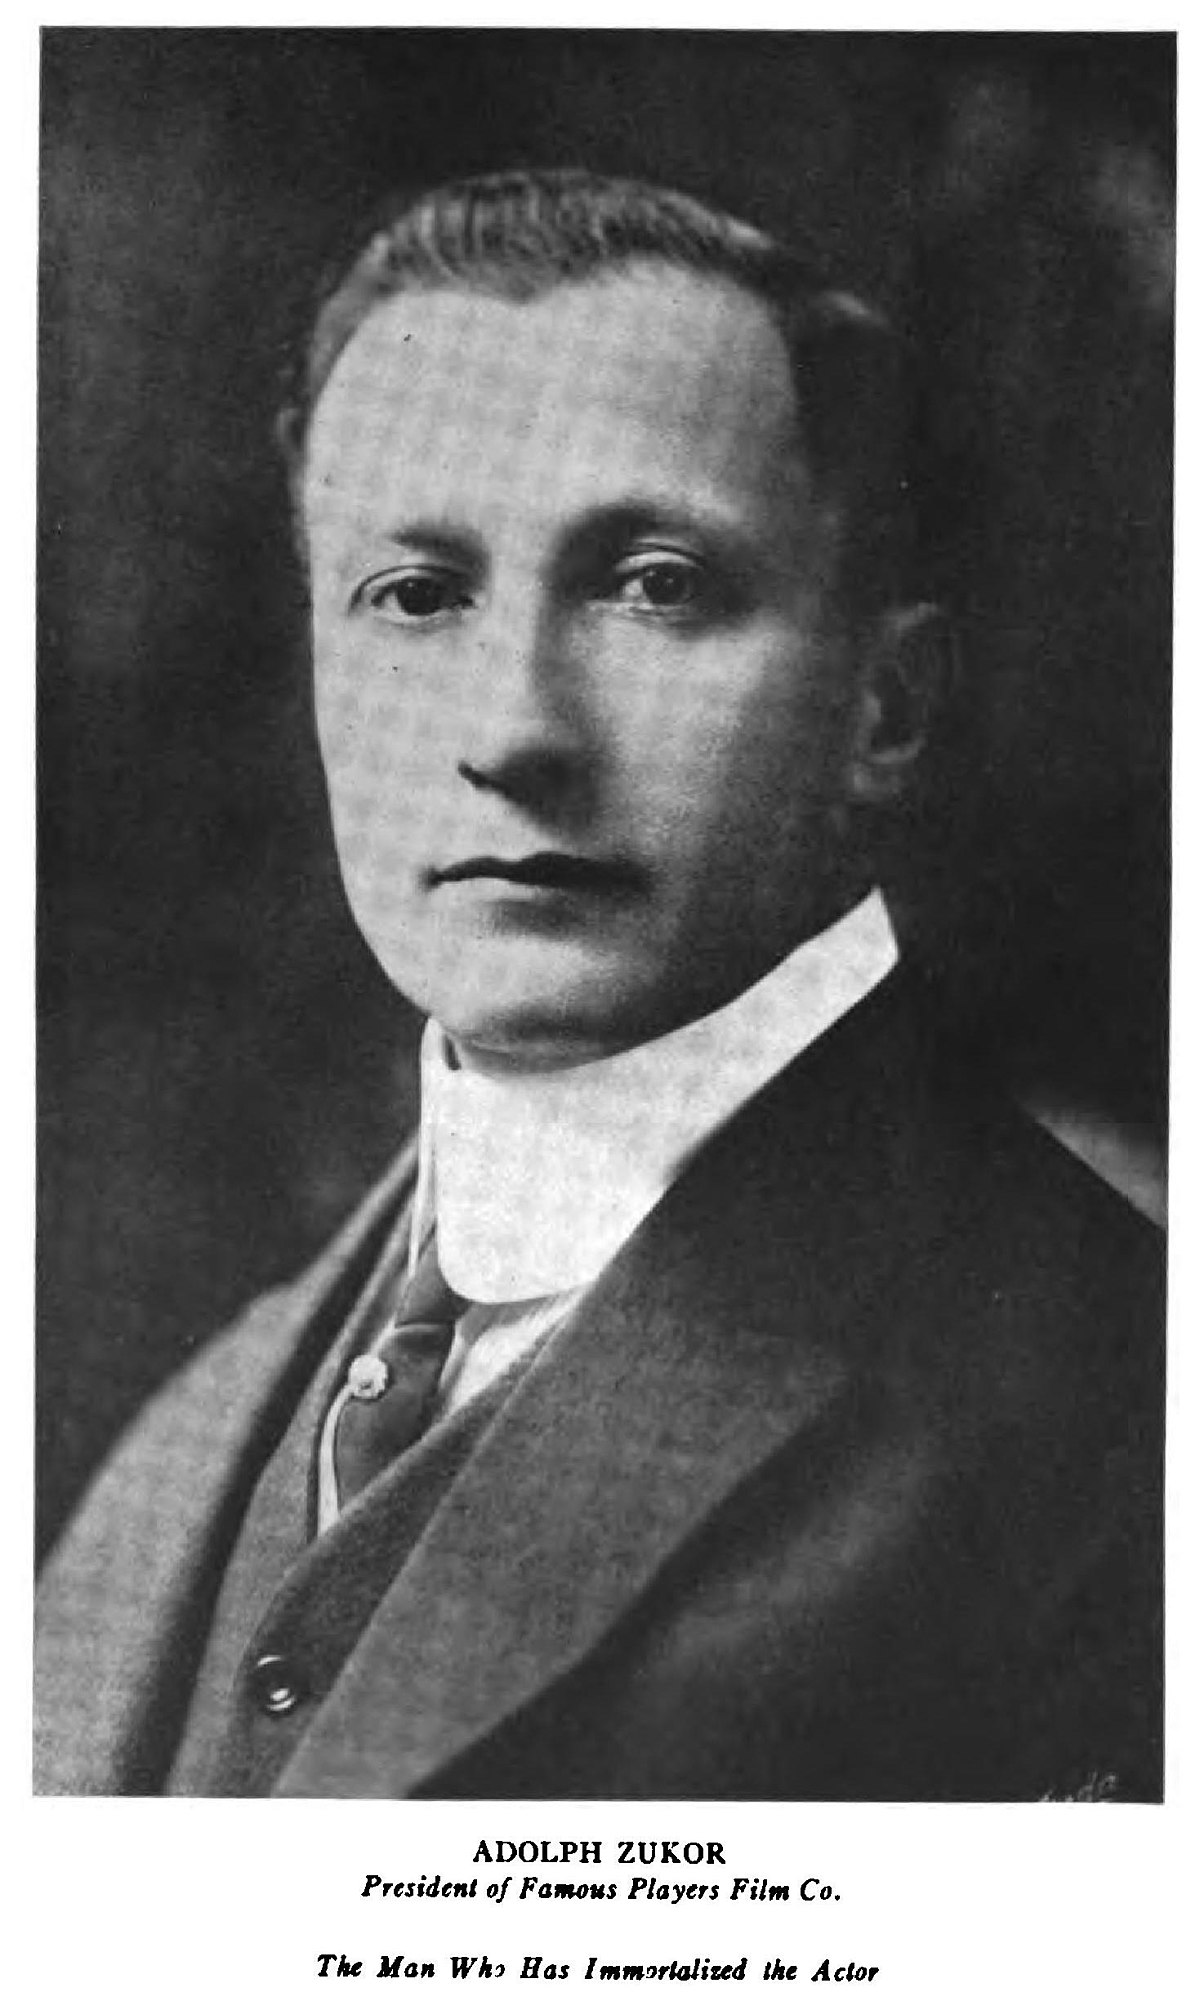 Adolph Zukor - Wikipedia